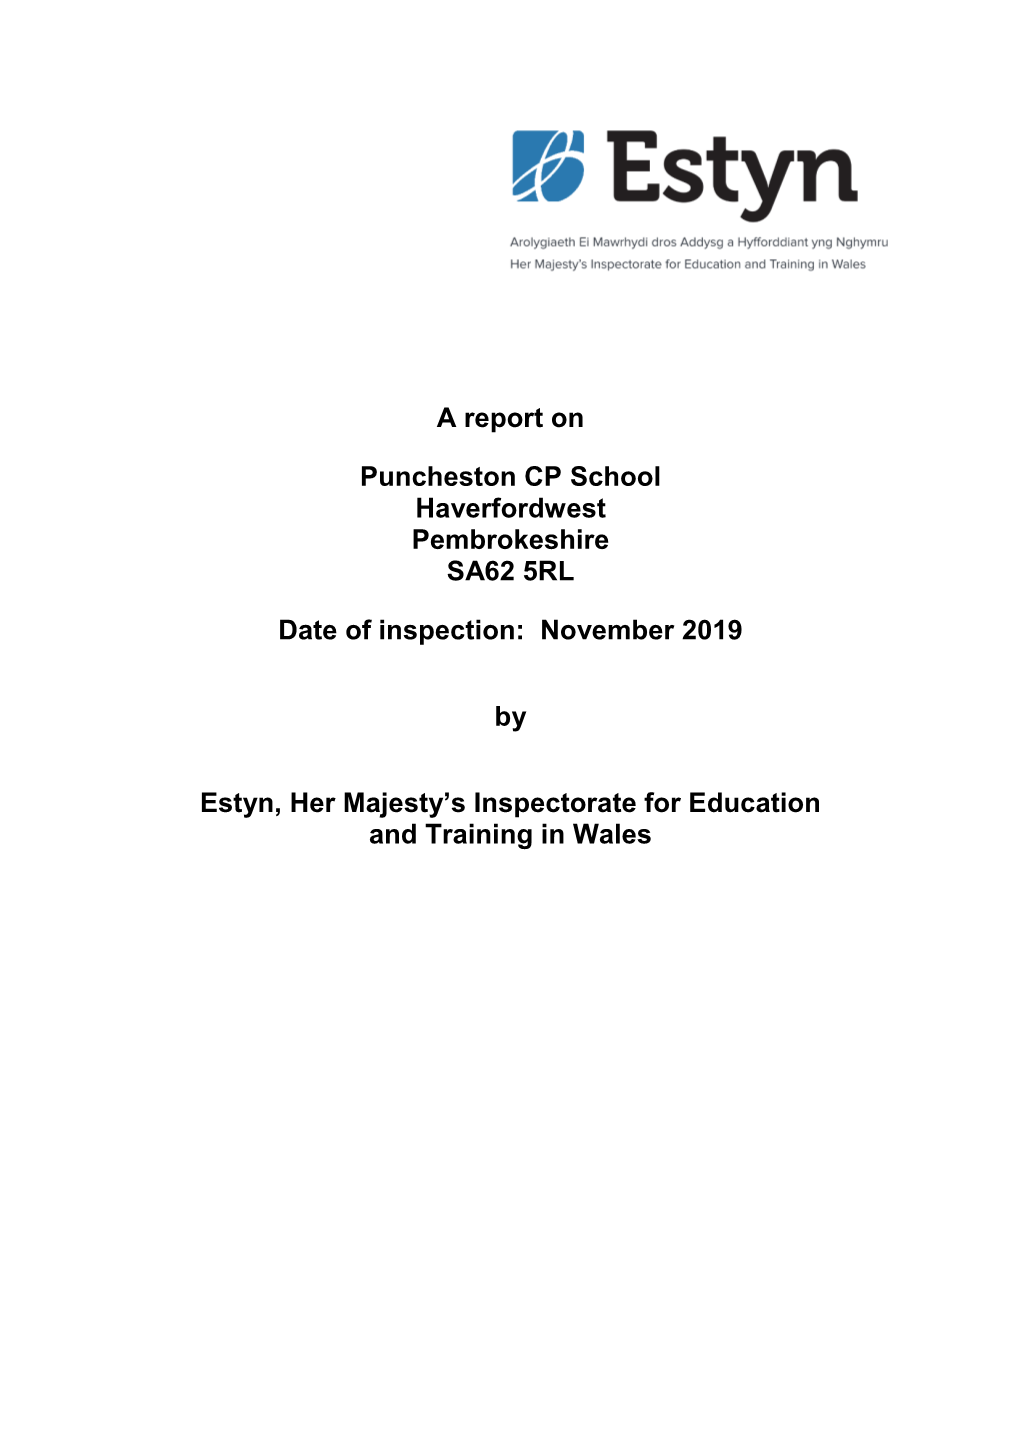 Inspection Report Puncheston CP School 2020